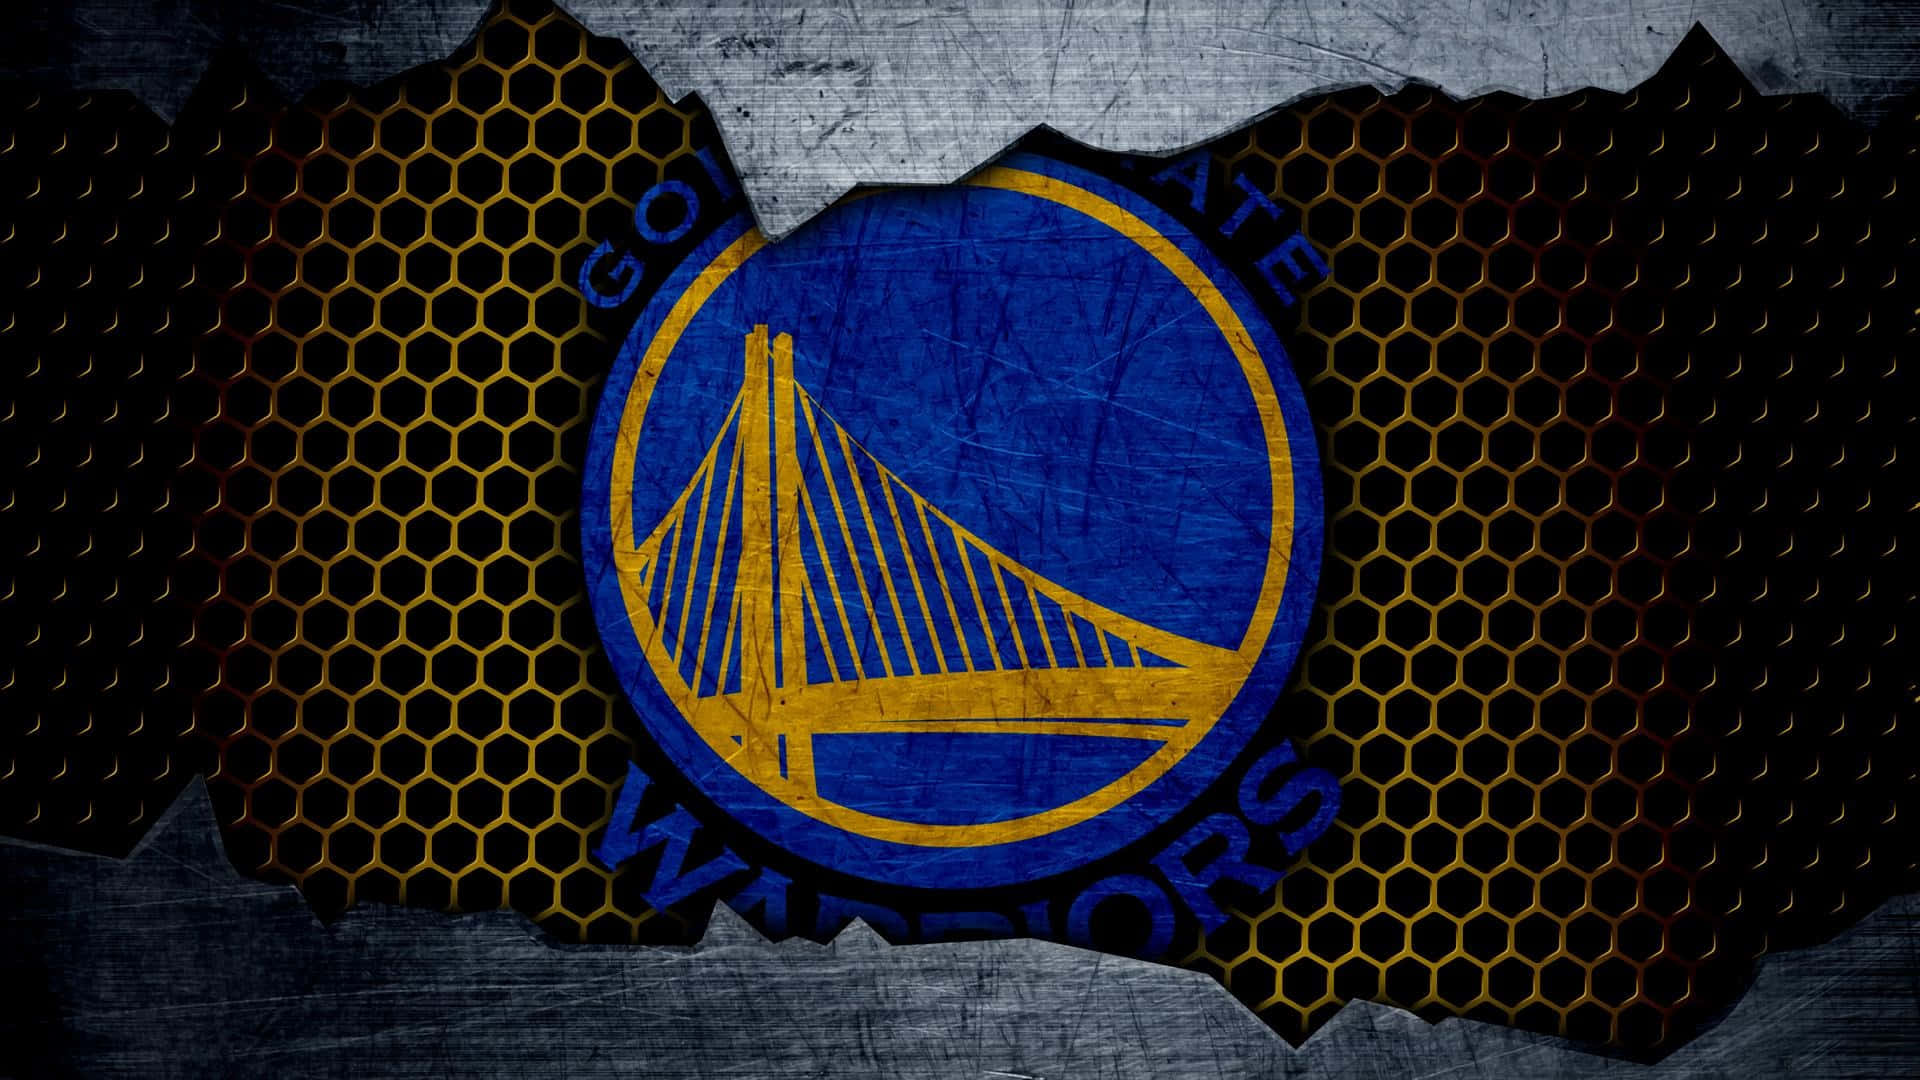 100+] Golden State Warriors Logo Wallpapers